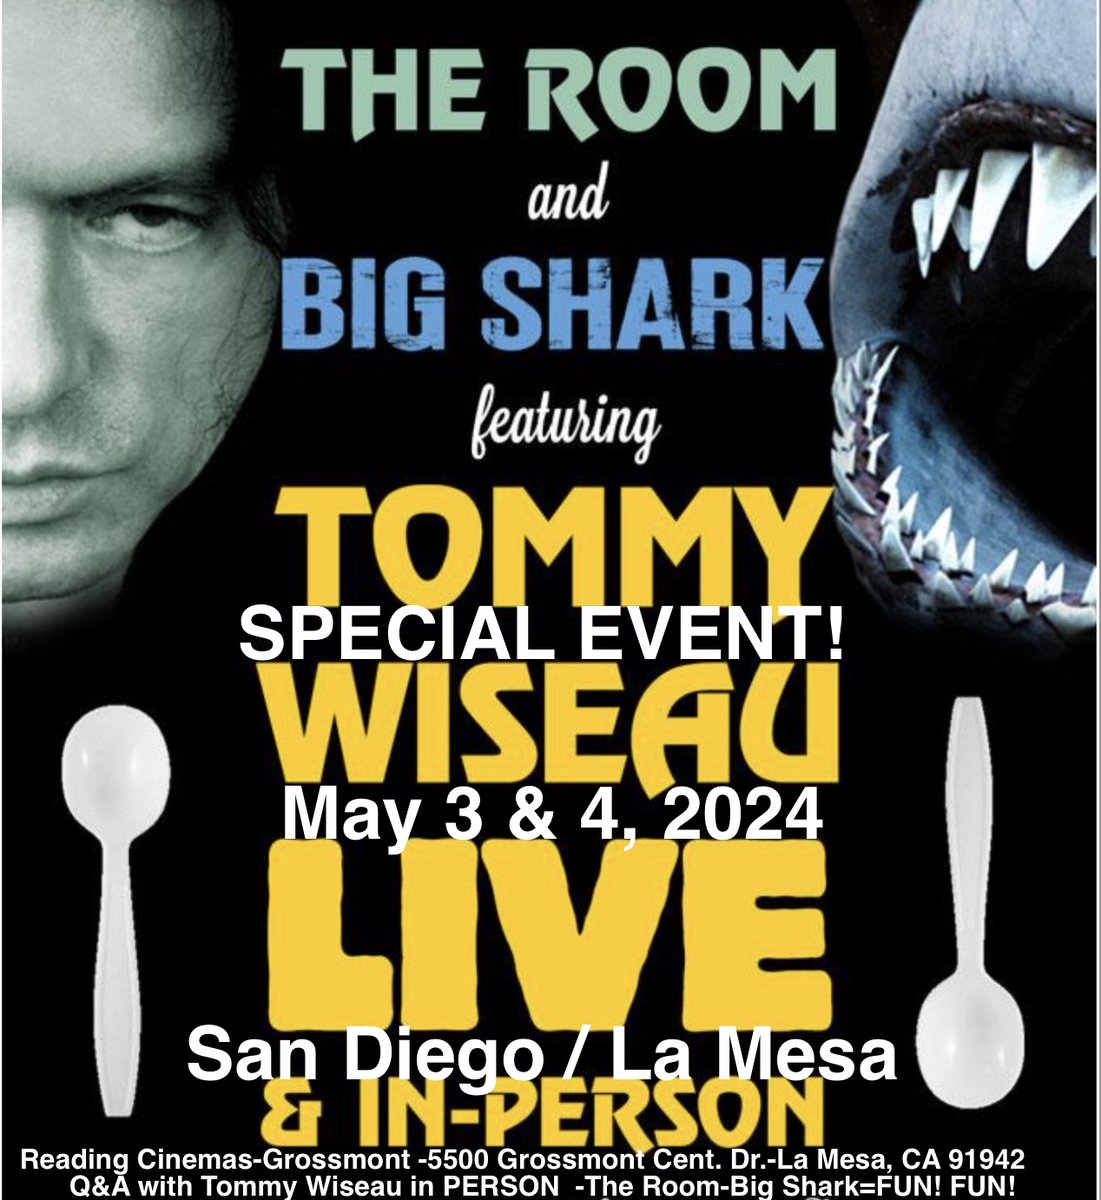 Big Shark/ The Room/ Screenings: TheRoomMovie.com